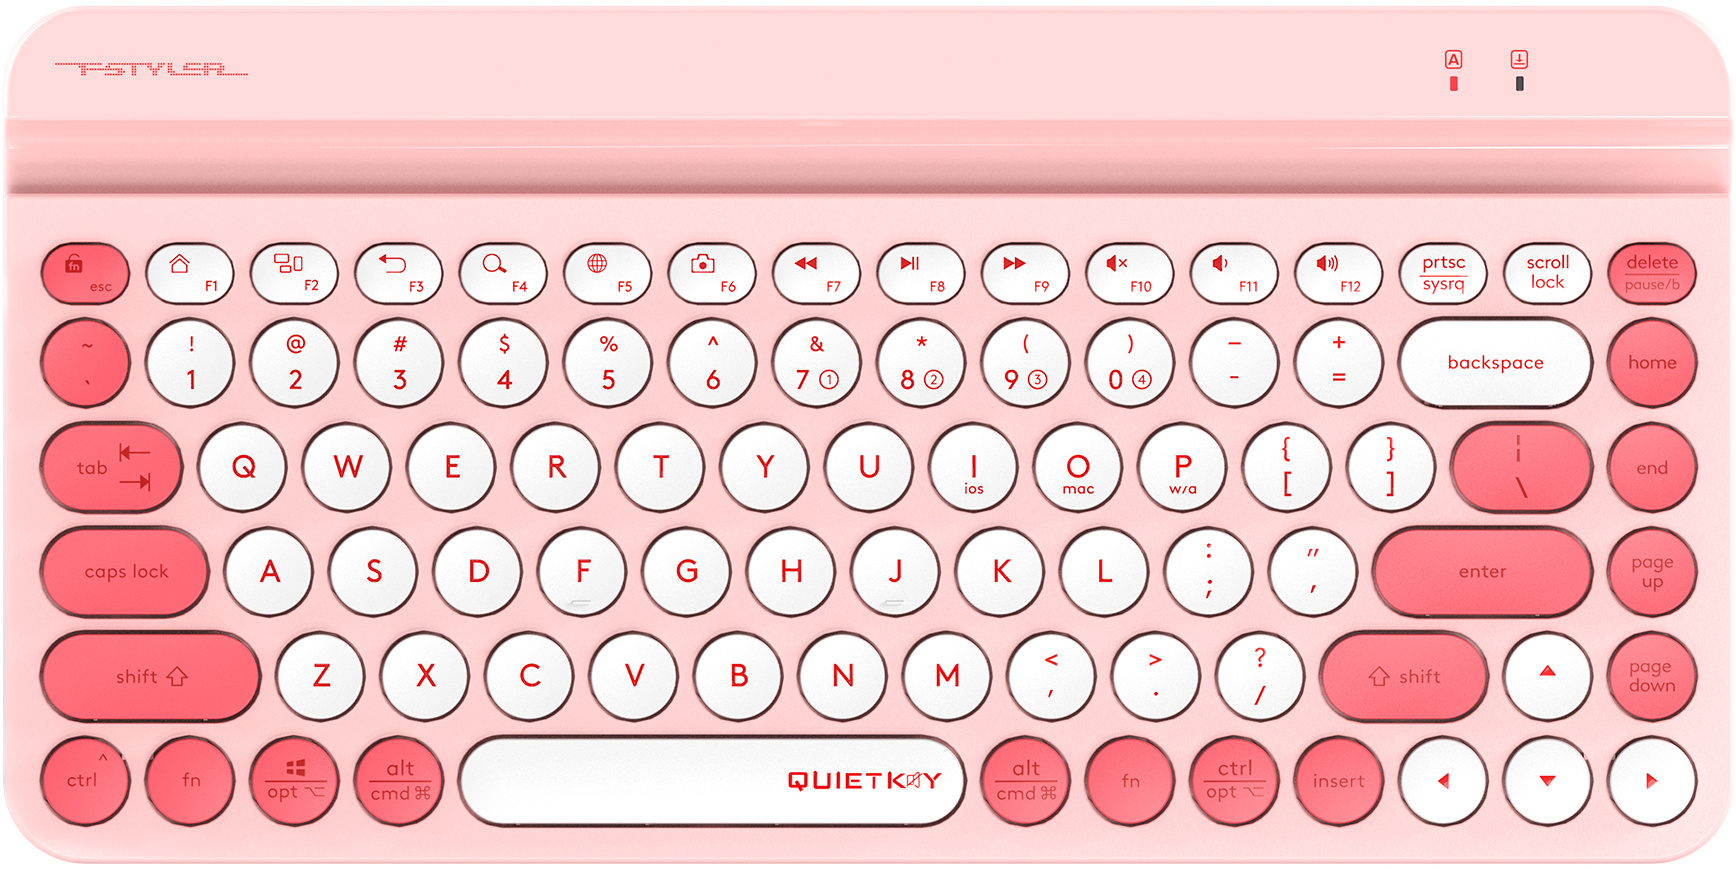 Клавиатура A4Tech Fstyler FBK30, розовый